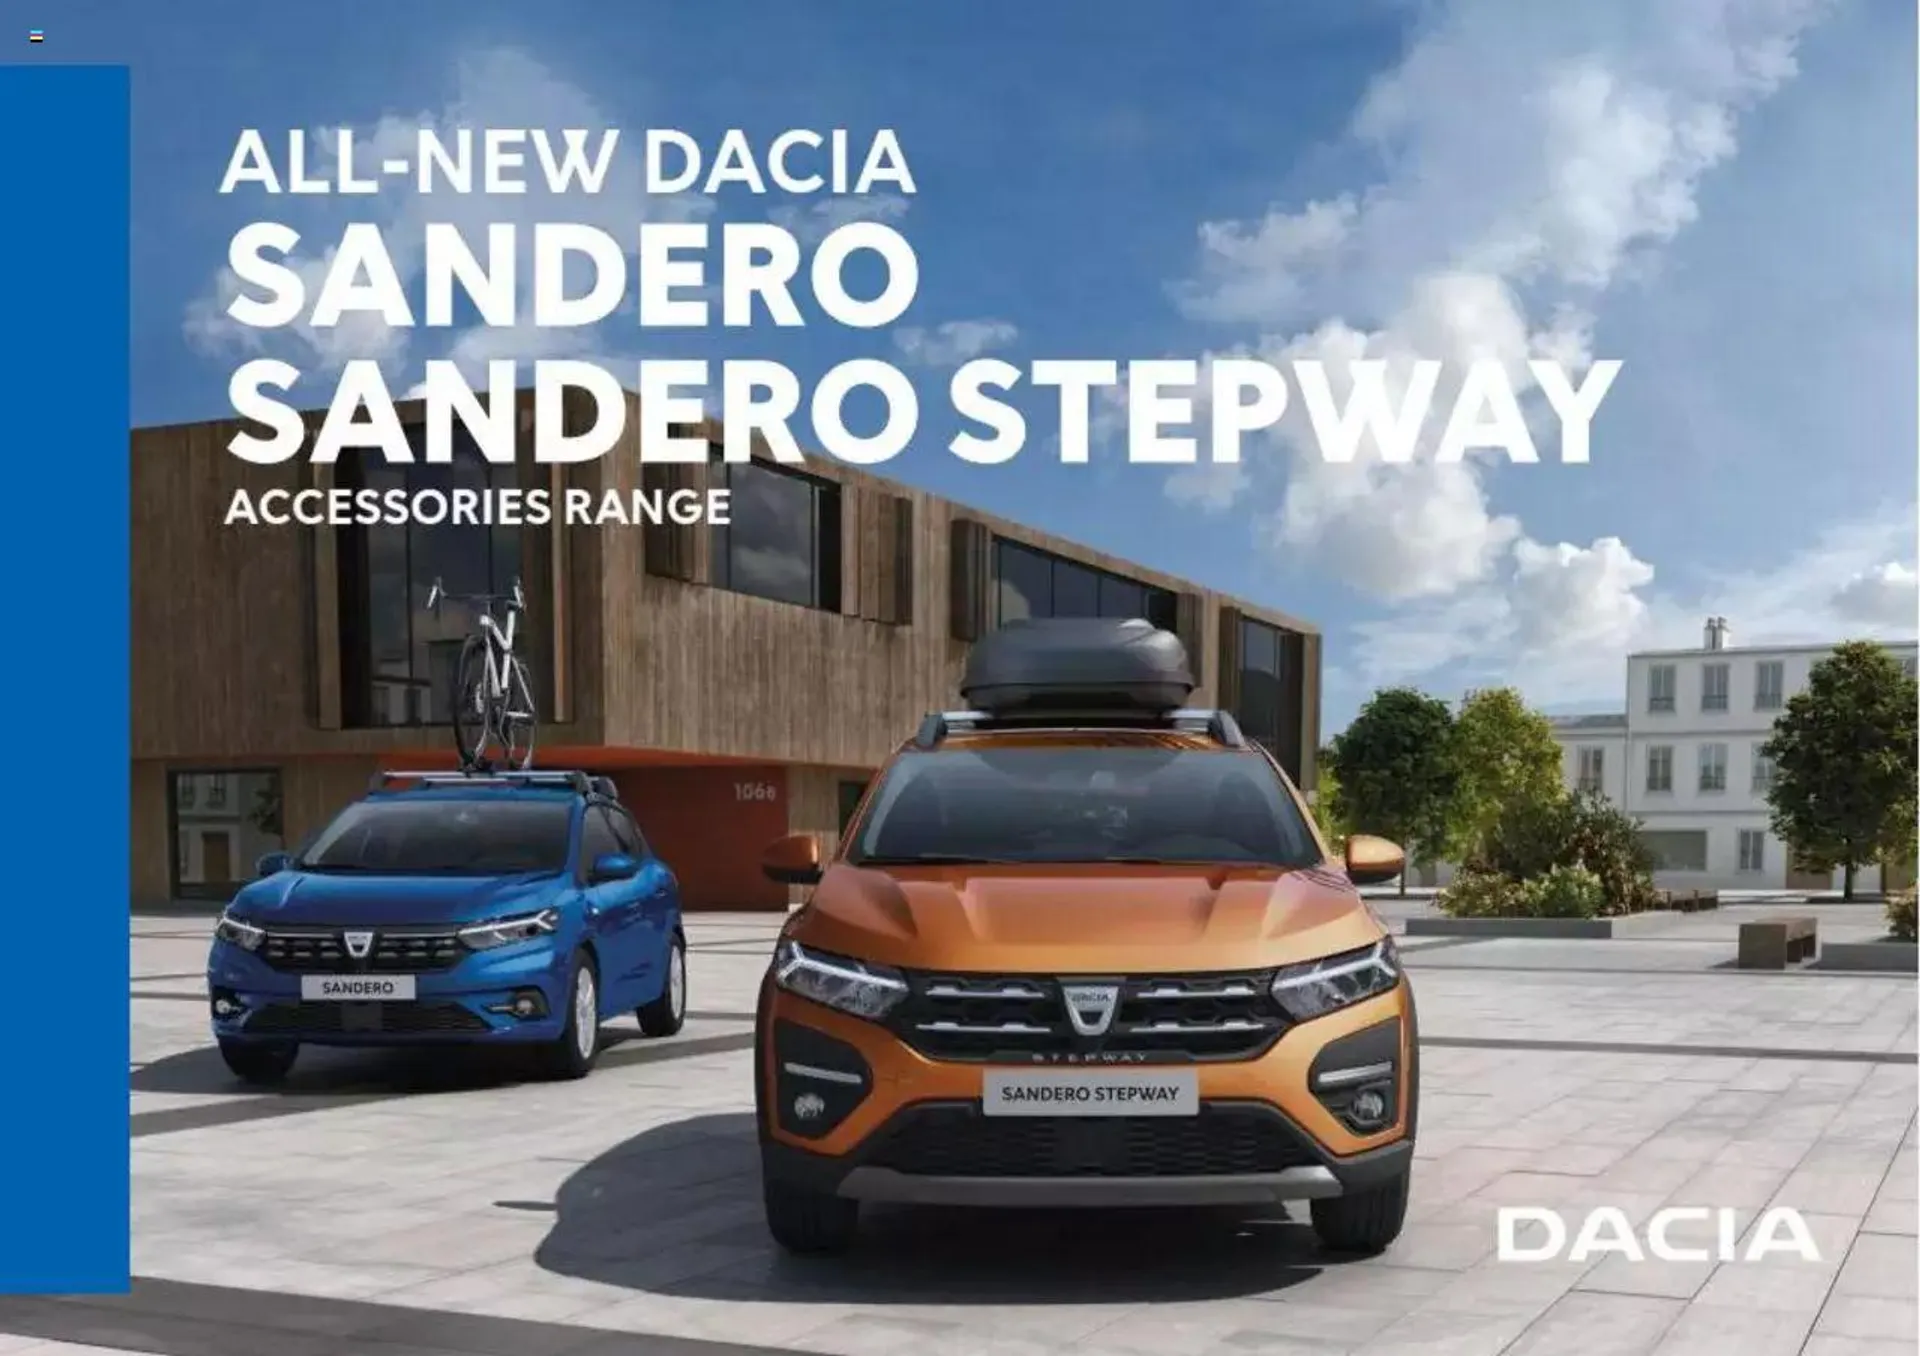 Dacia - Sandero Accesories Range - 0